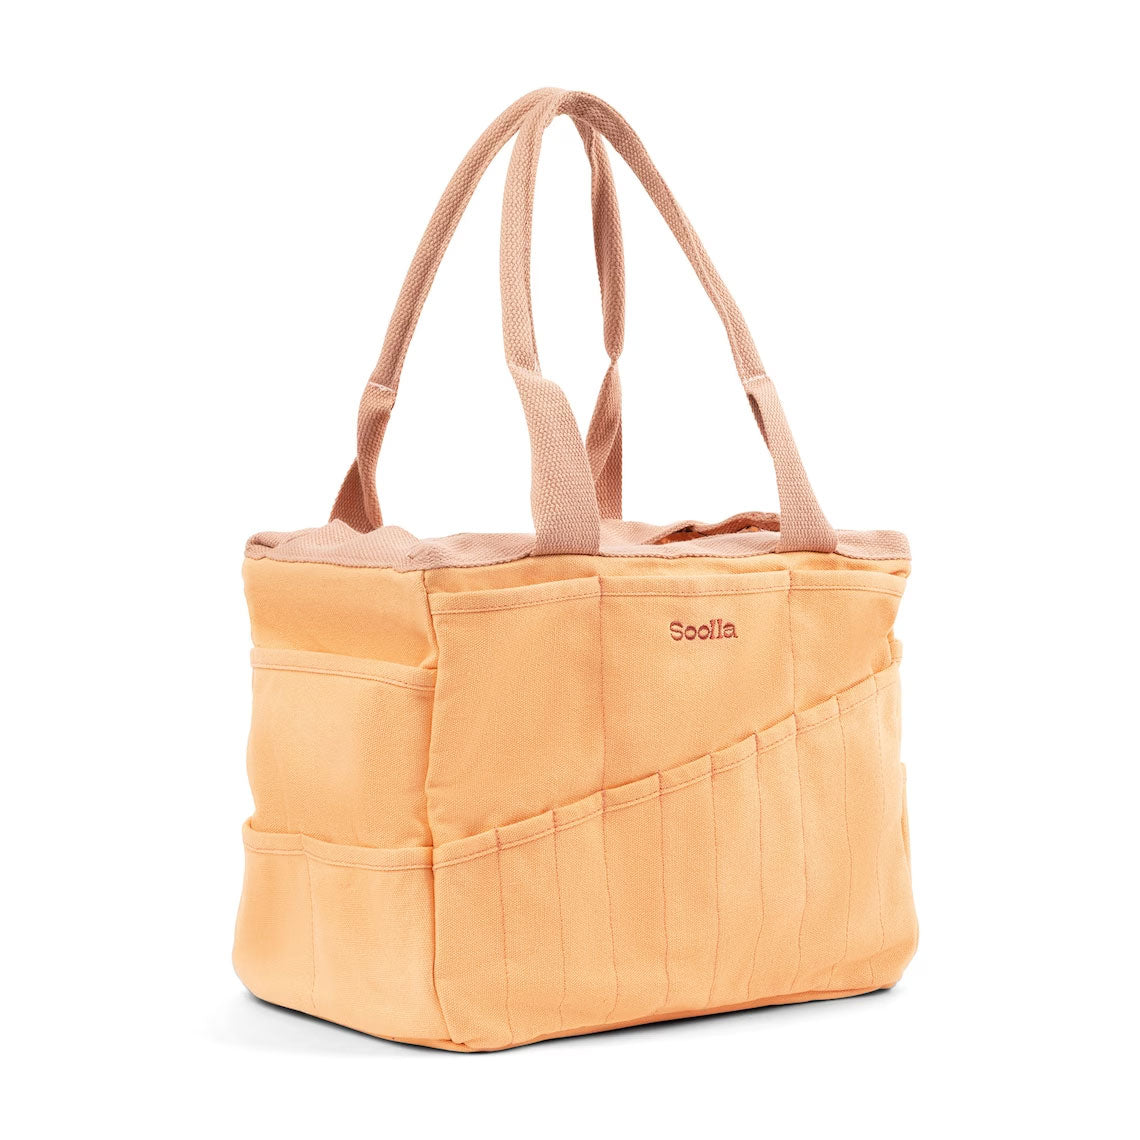 Soolla Studio Art Supply Bag - Orange Creamsicle